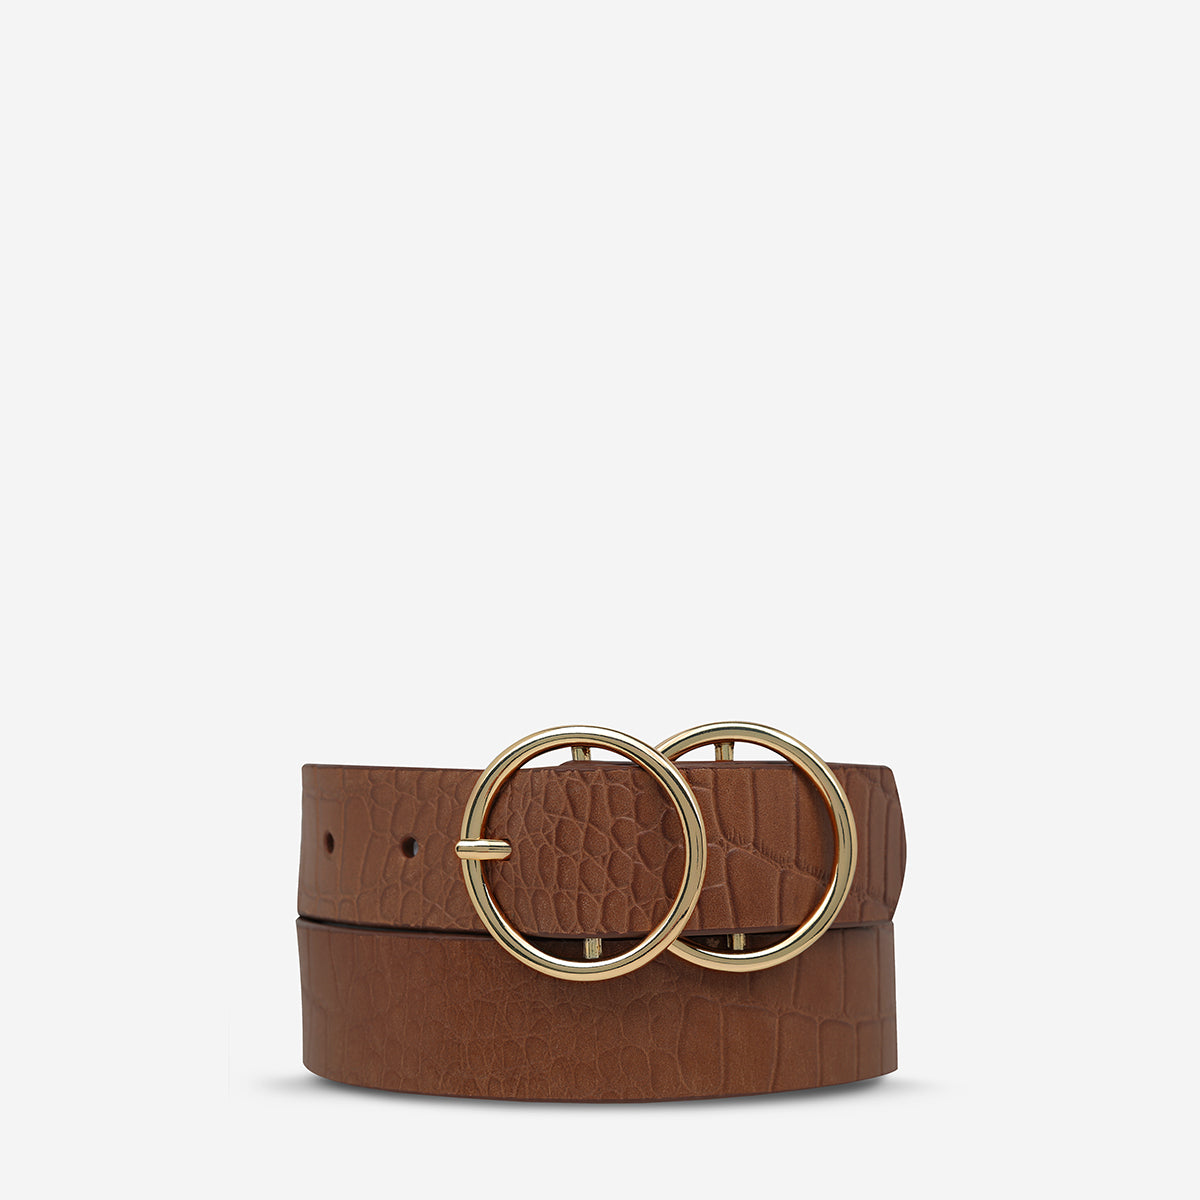 Tan Croc/Gold Leather Belt 